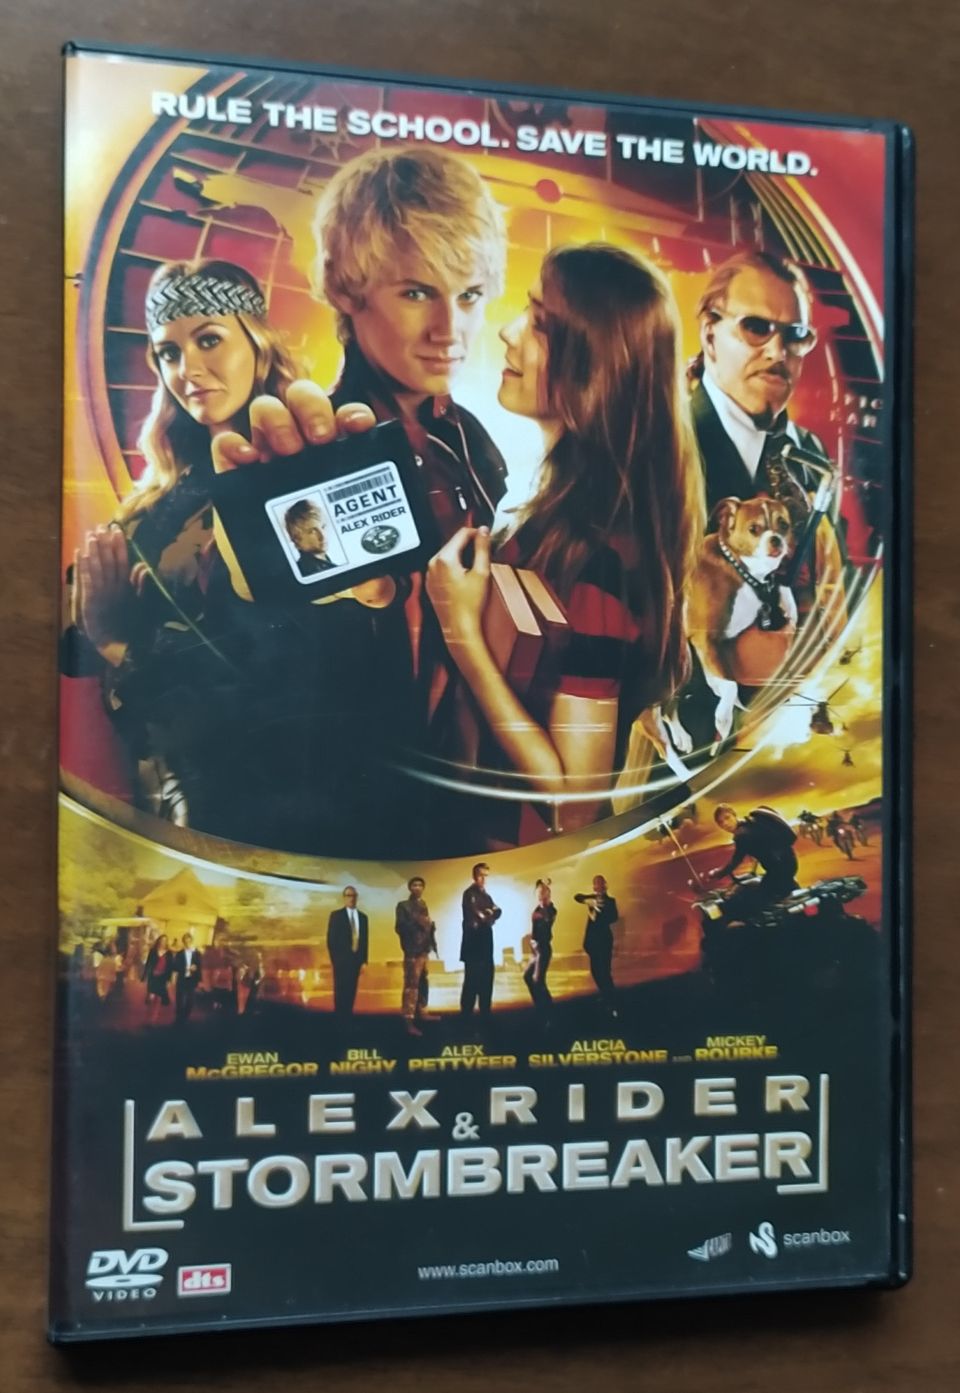 Alex Rider & Stormbreaker DVD